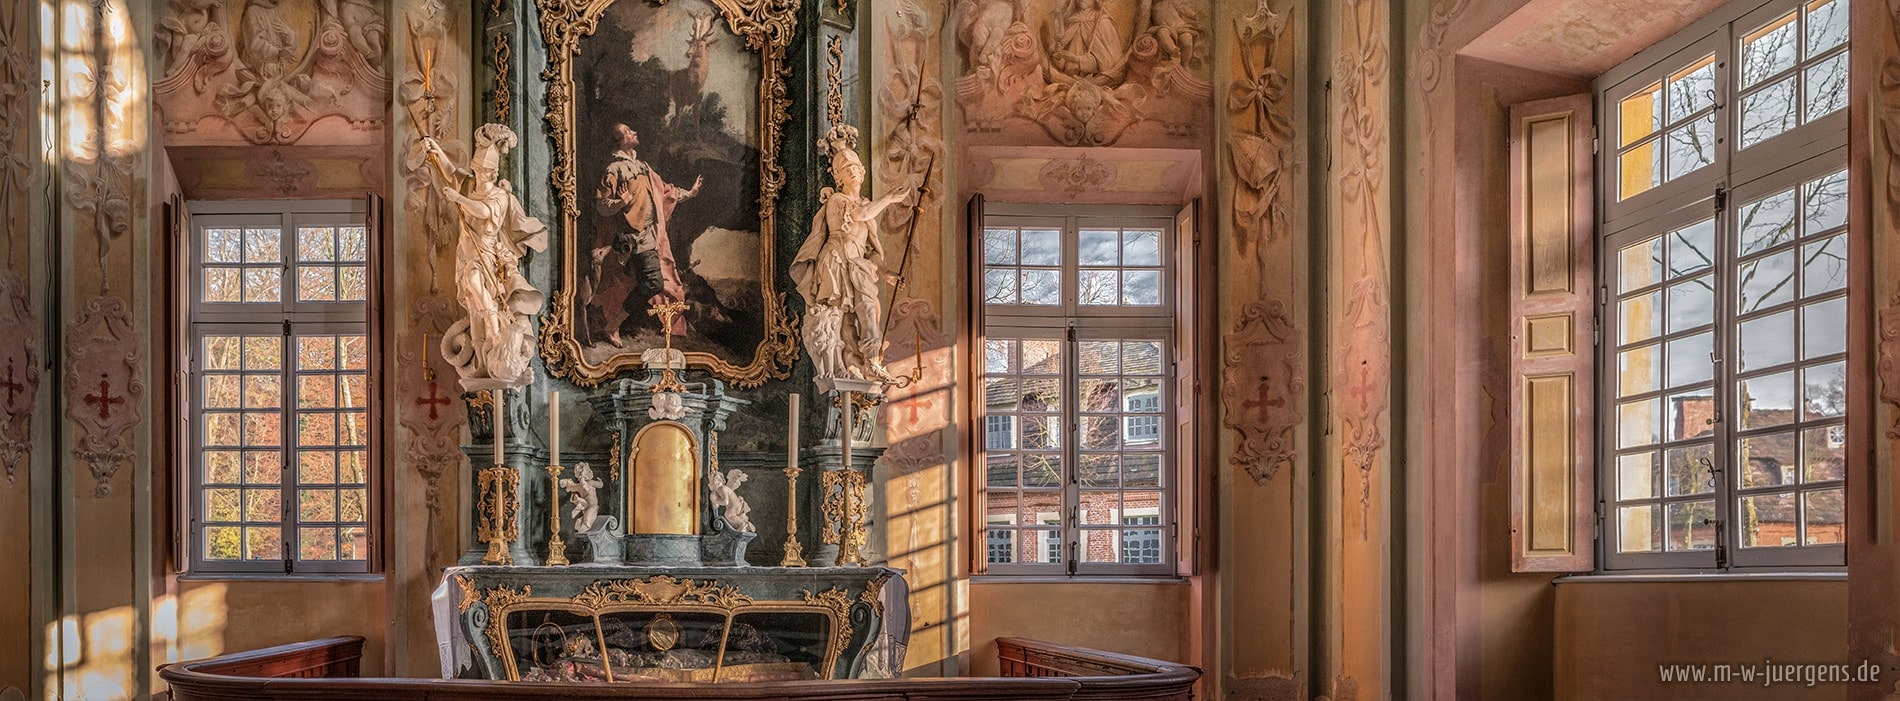 Clemenswerth Palace, New Realism Art, Manfred W. Jürgens Wismar